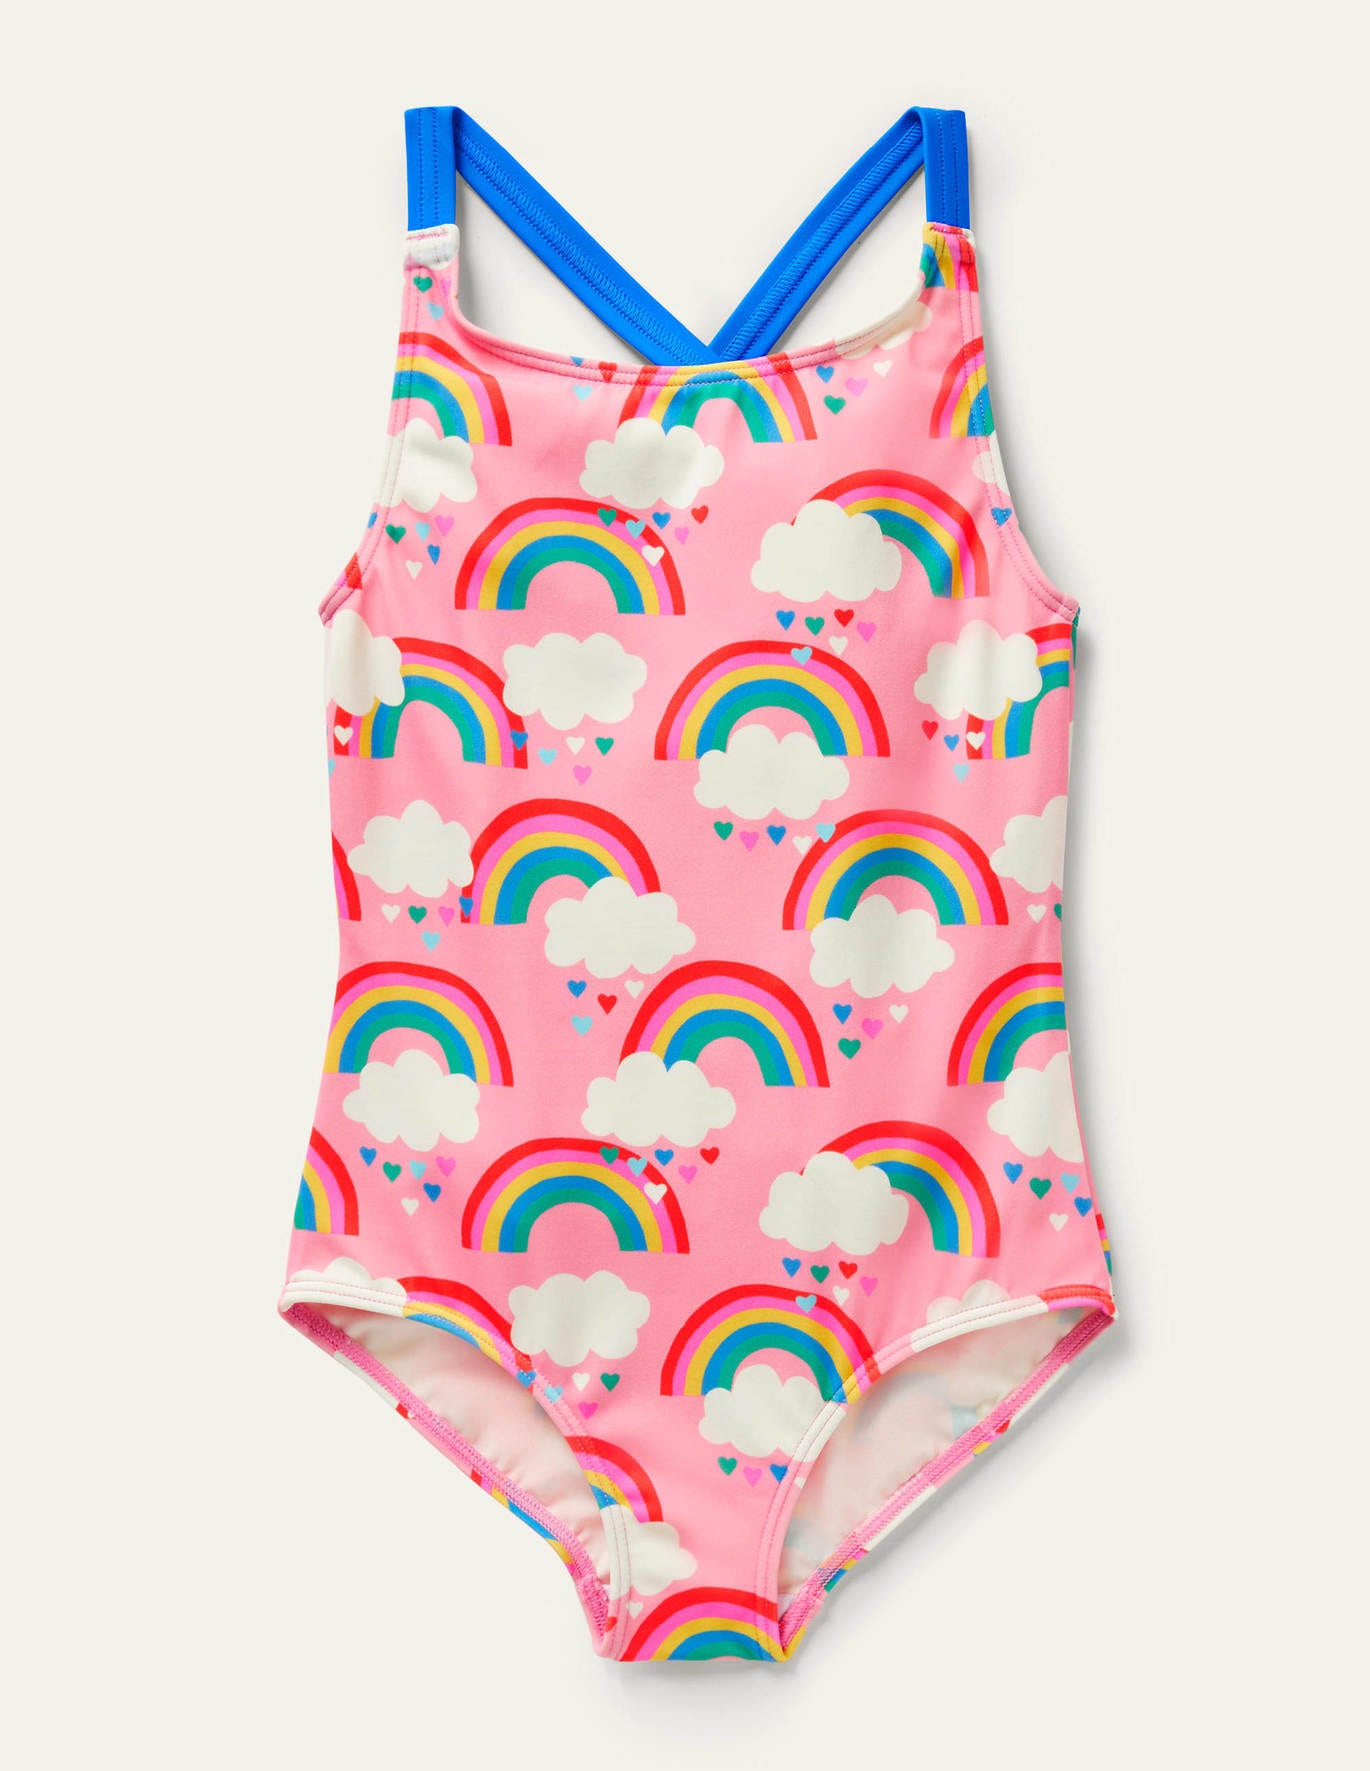 Boden Cross-back Printed Swimsuit - Pink Lemonade Love Rainbows